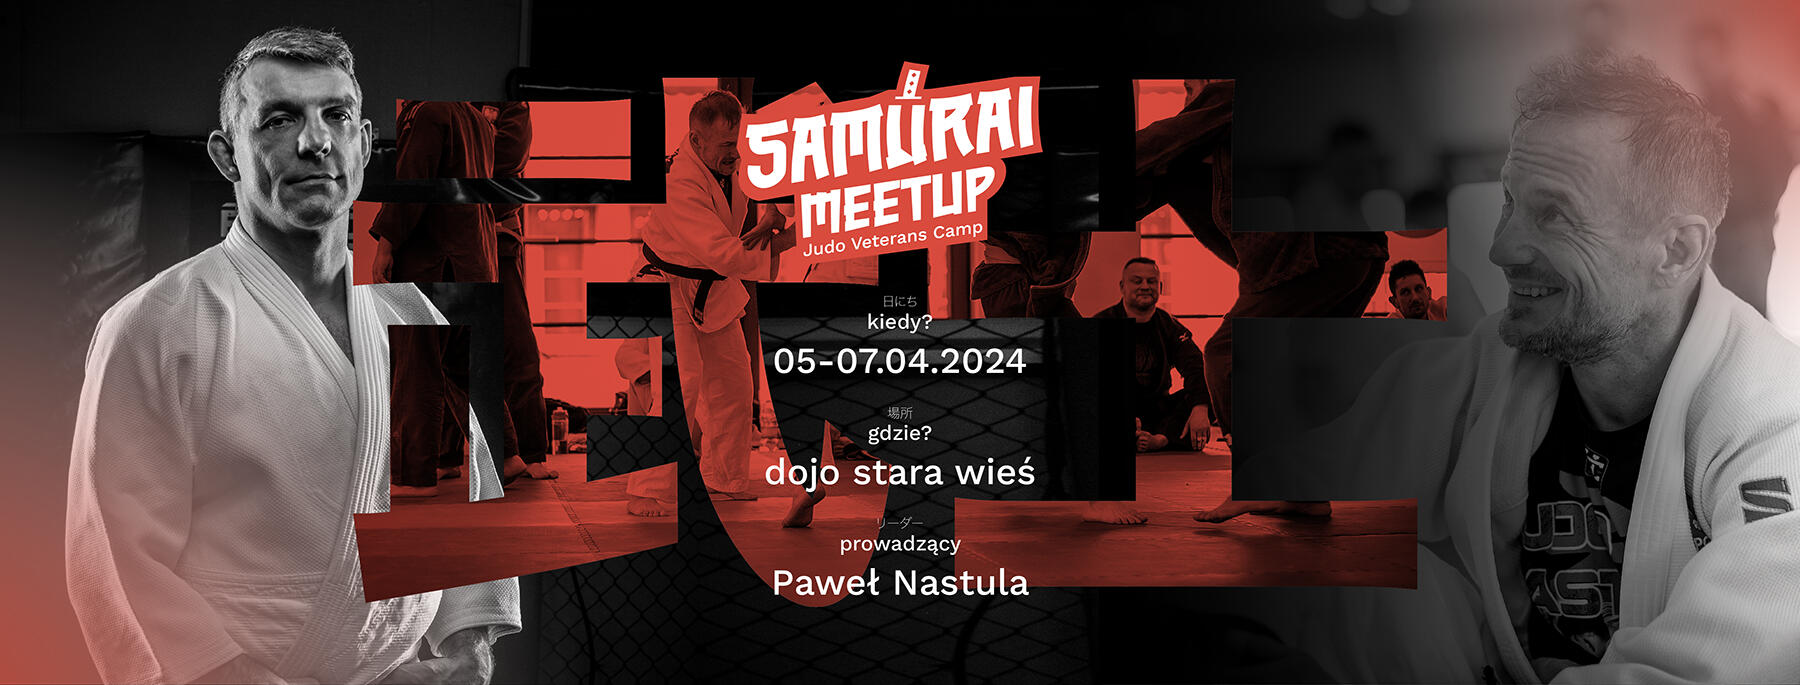 Samurai MeetUp 2024